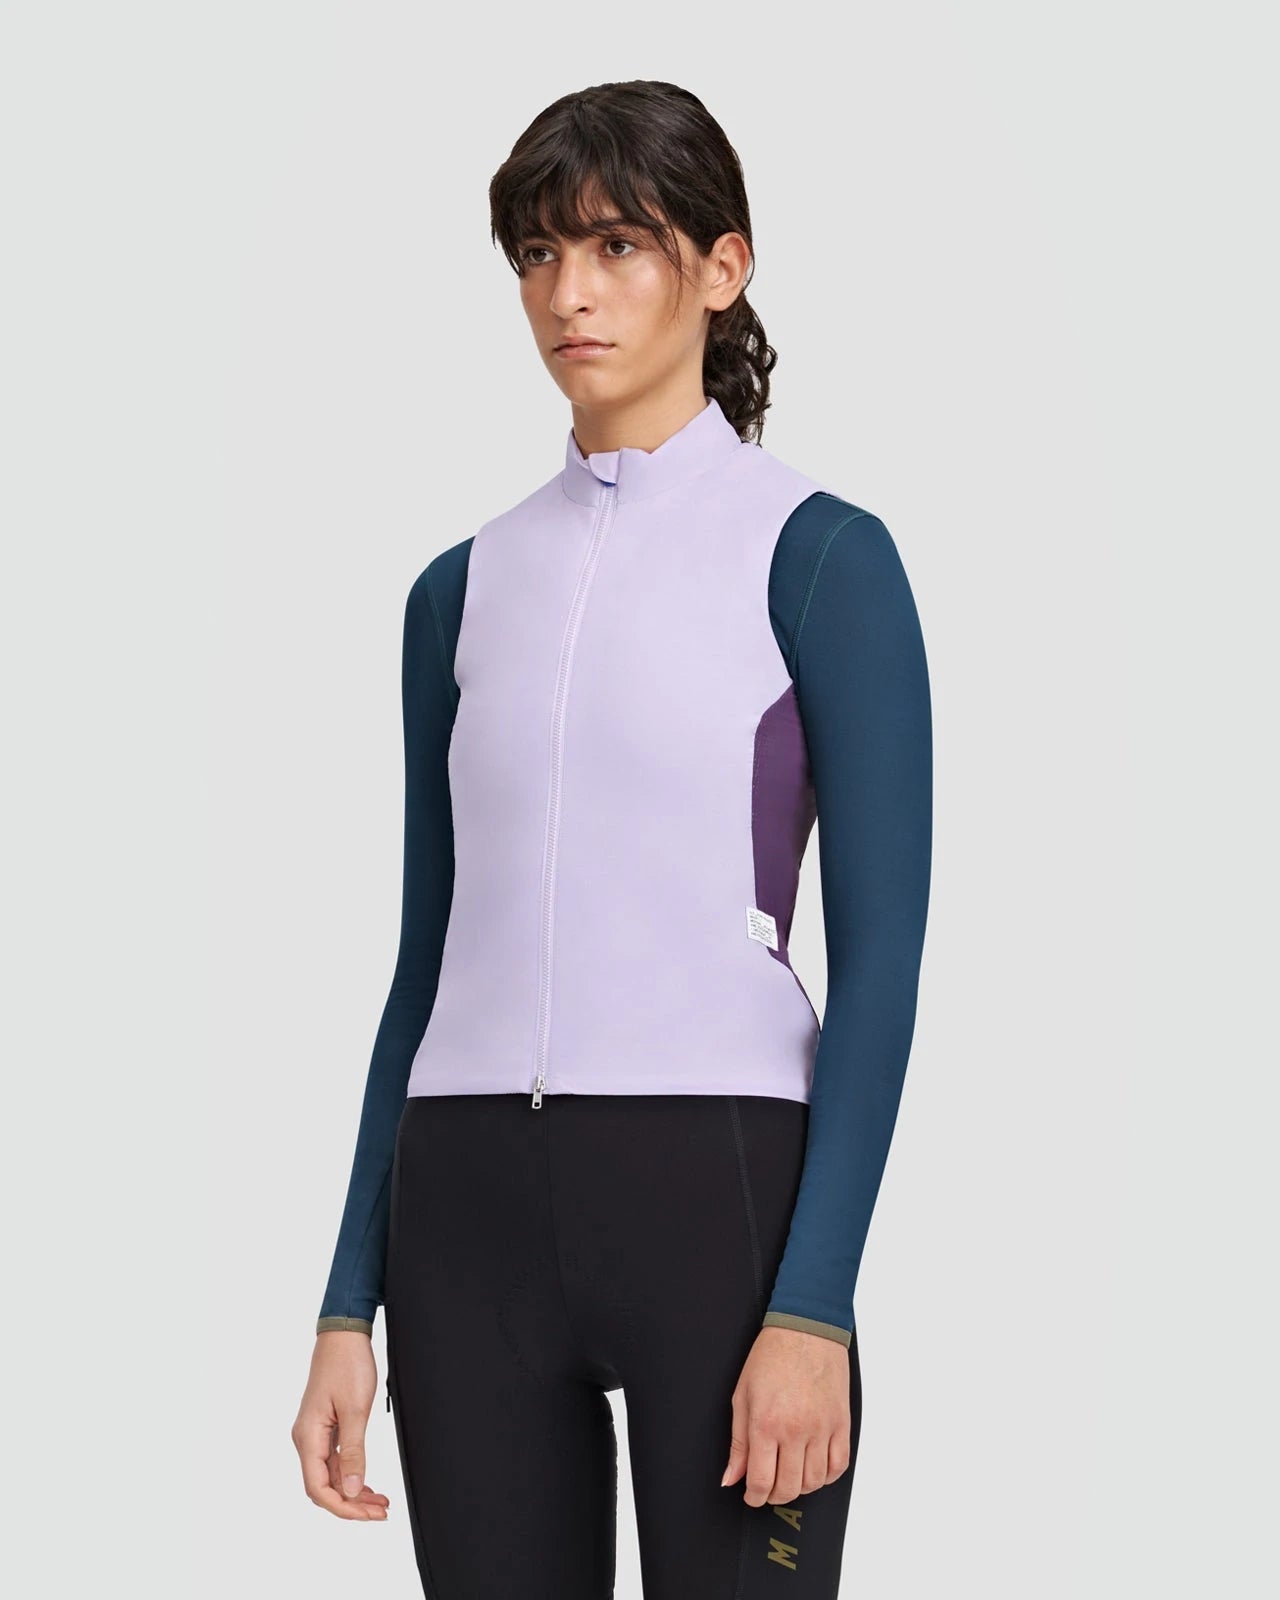 MAAP Women's Alt_Road Thermal Vest, 2022 - Cycle Closet